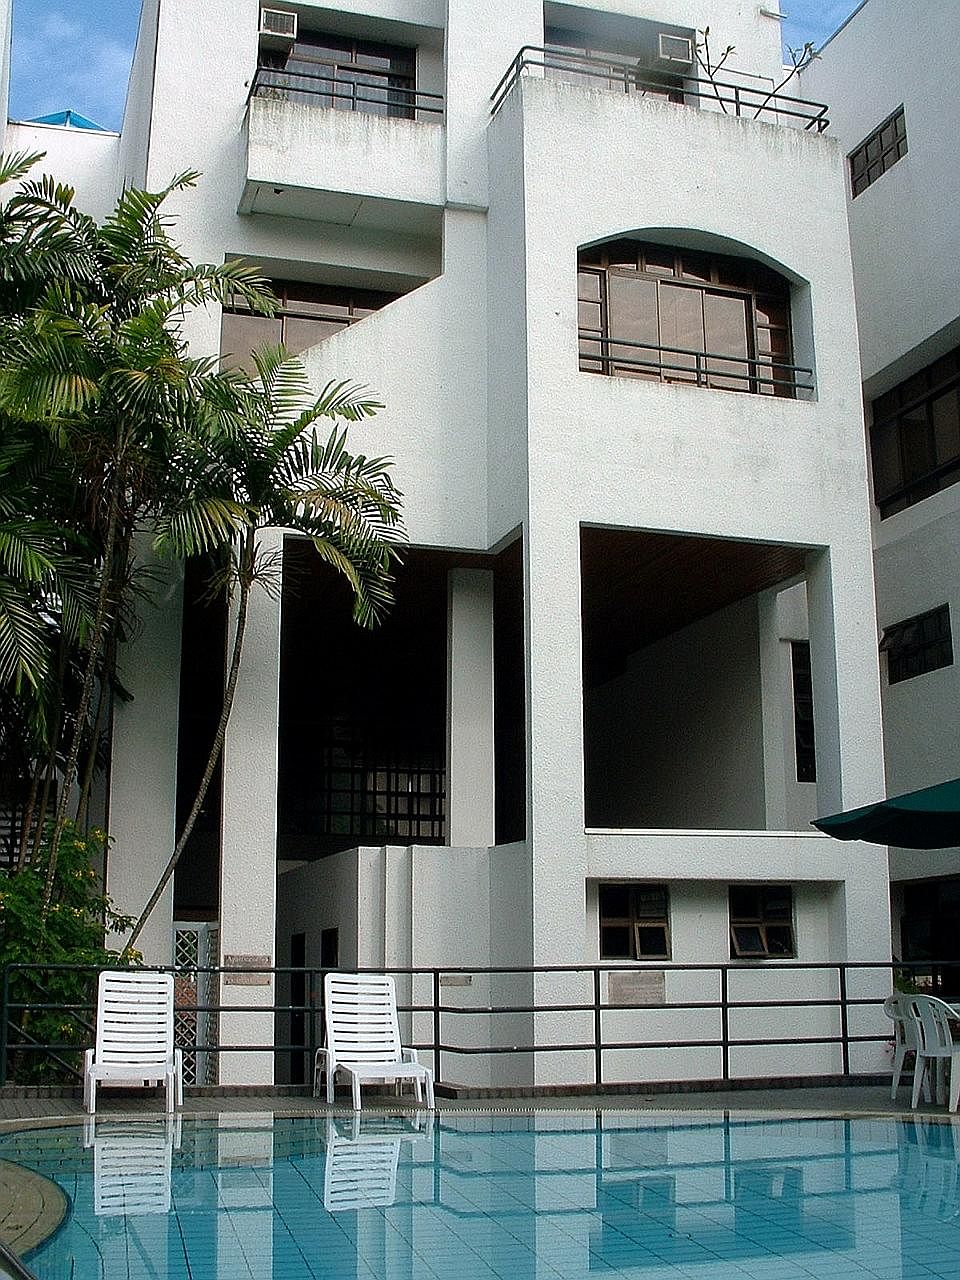 Casa Contendere, near Newton MRT, is a four-storey block with 11 maisonette units.